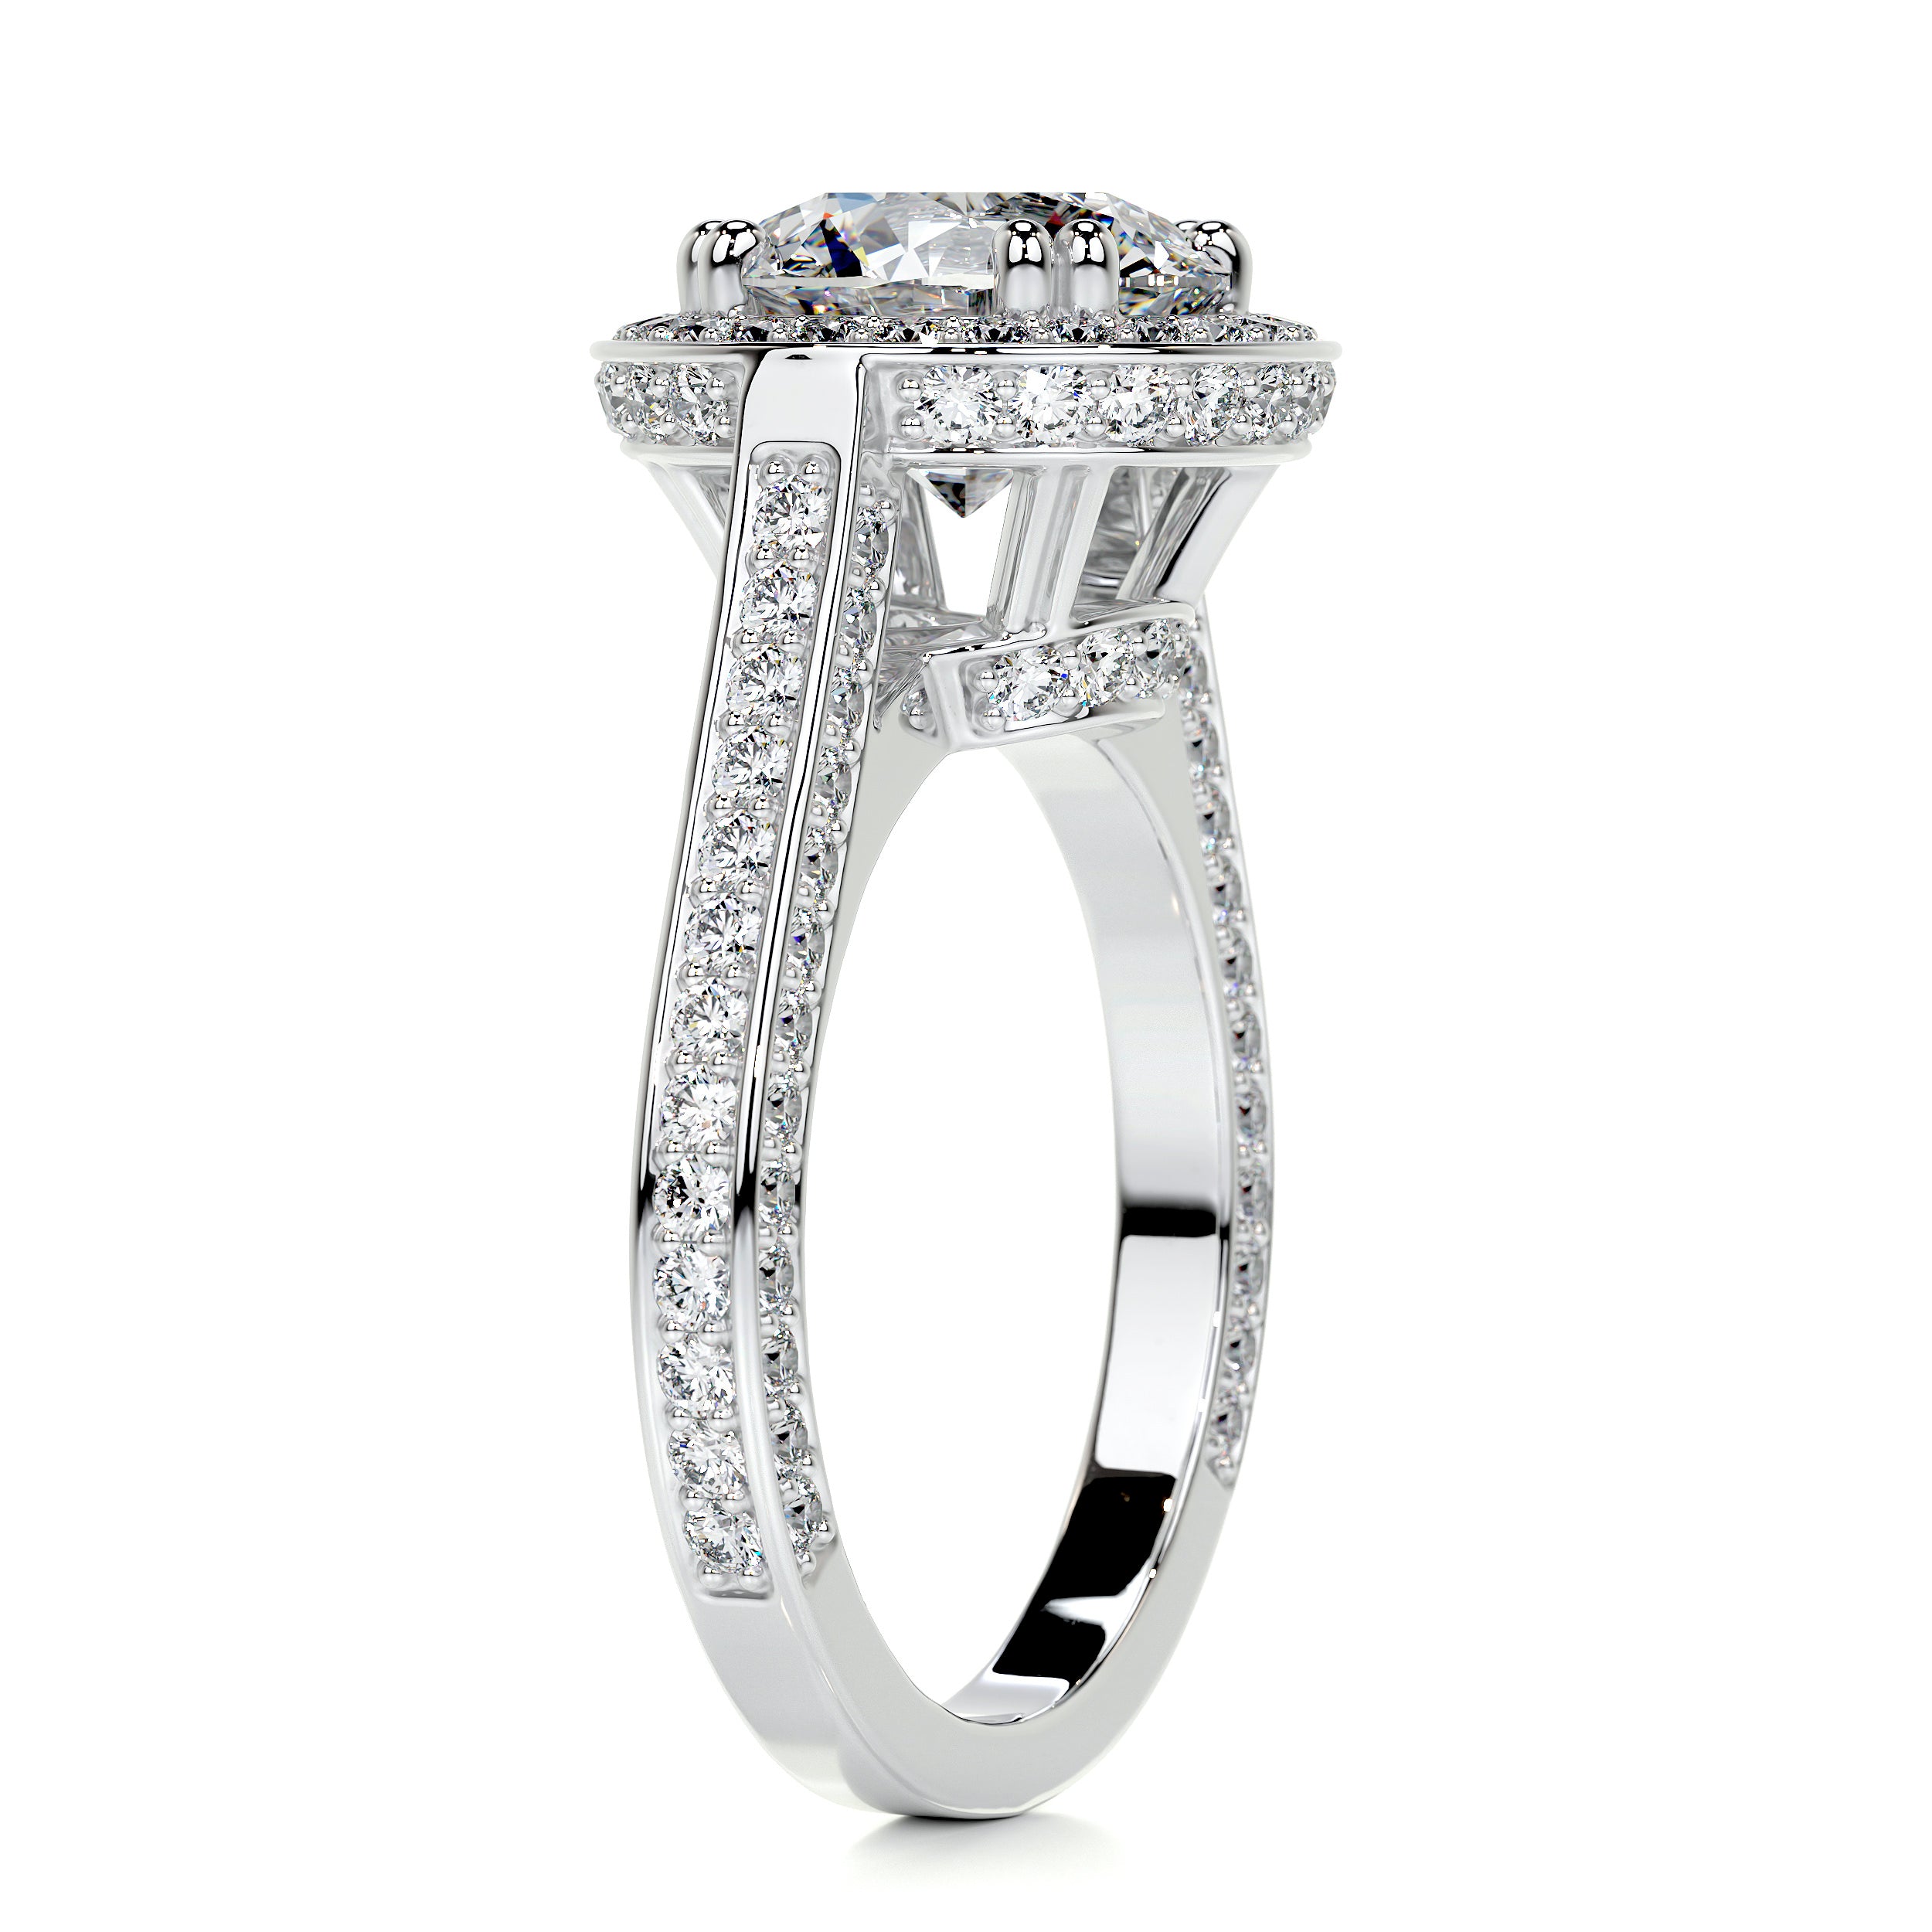 Lynn Diamond Engagement Ring   (2.85 Carat) -14K White Gold